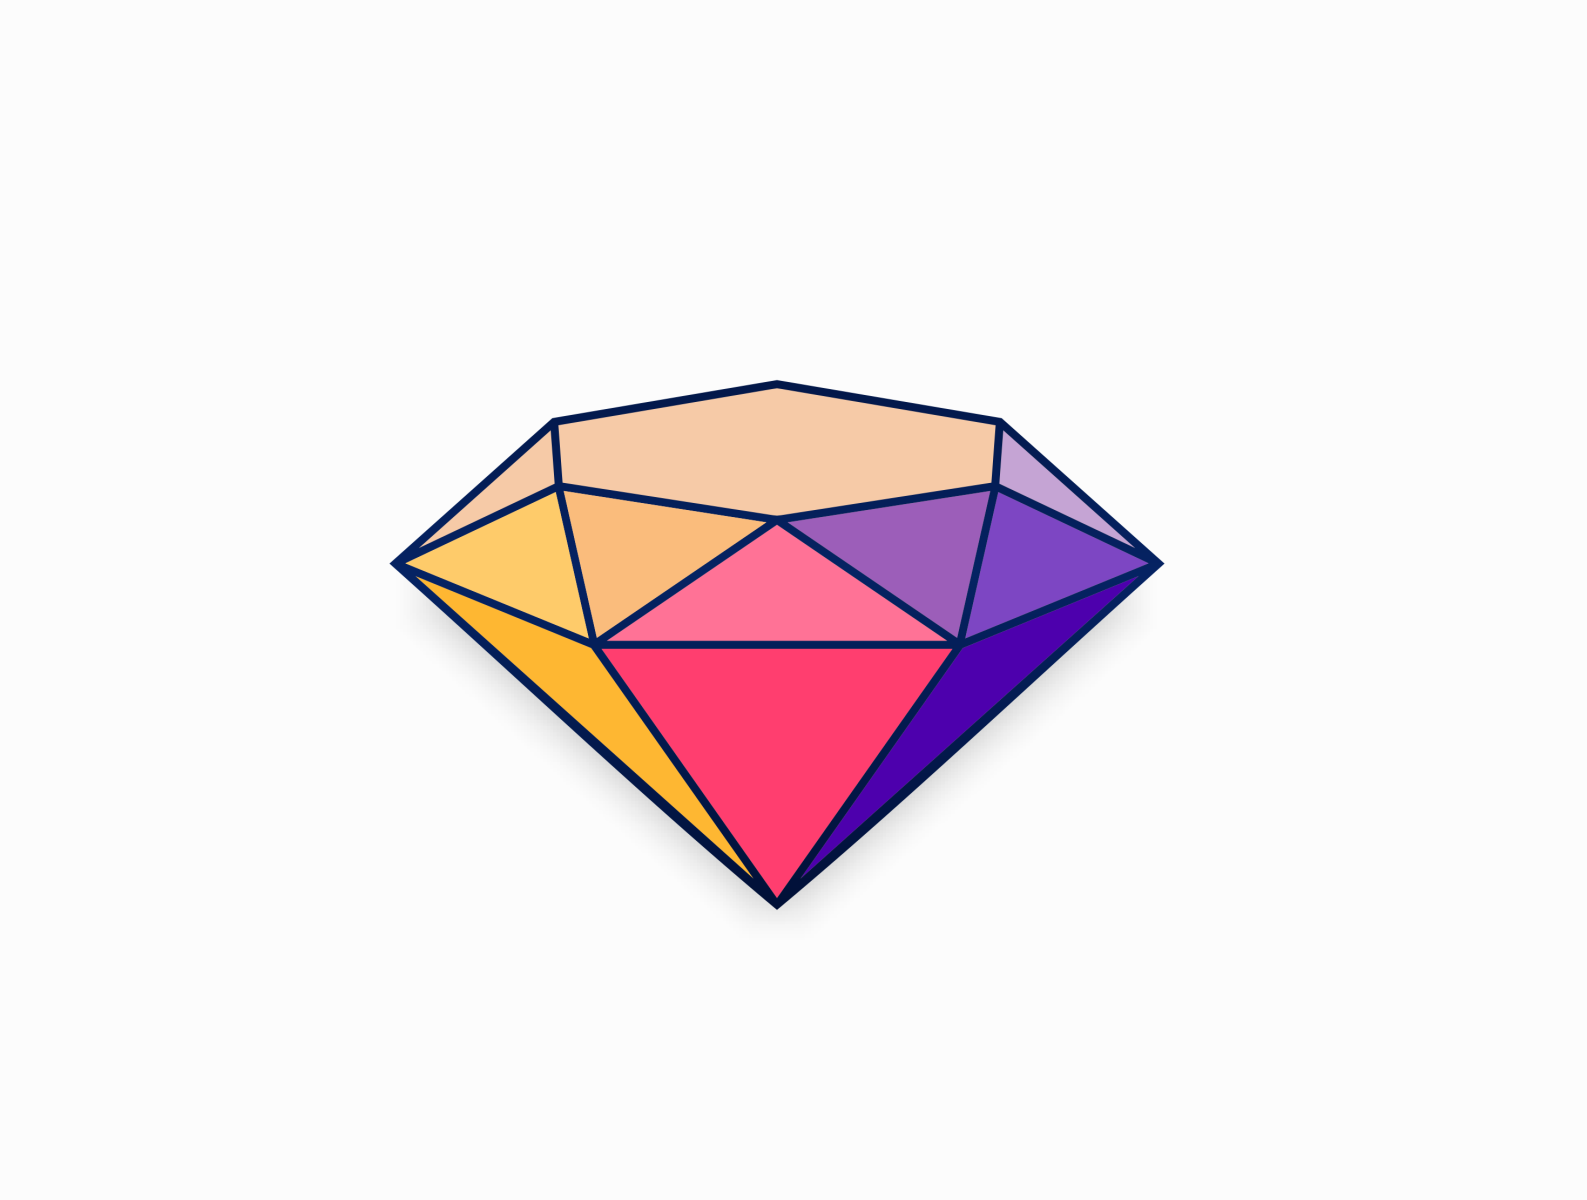 Block Diamond by evvie | 013 on Dribbble